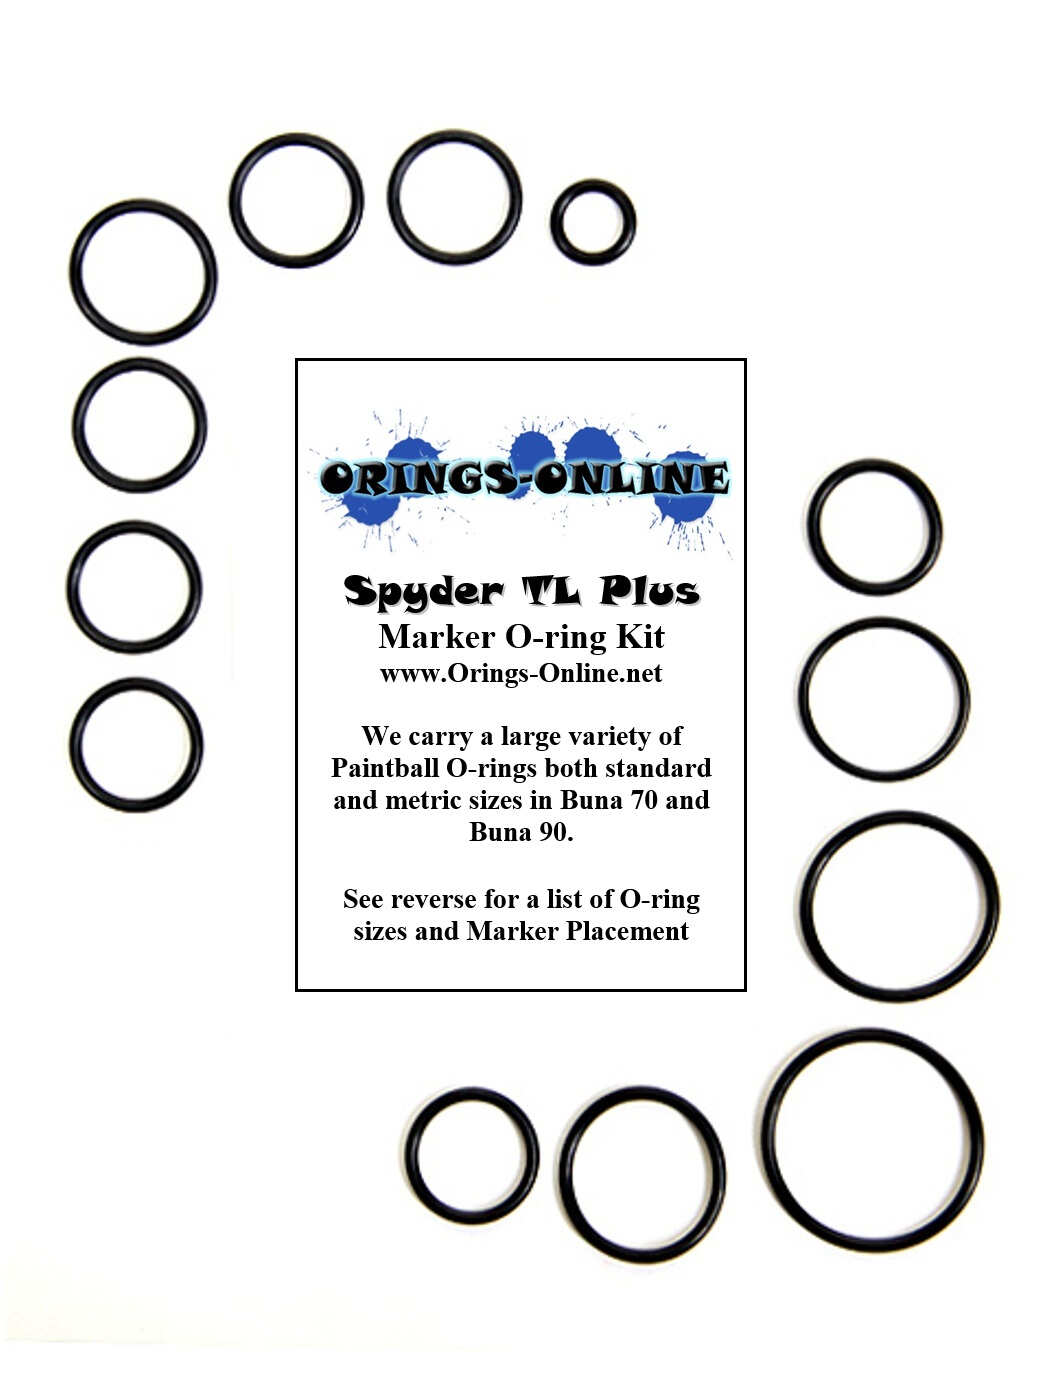 Spyder TL Plus Marker O-ring Kit